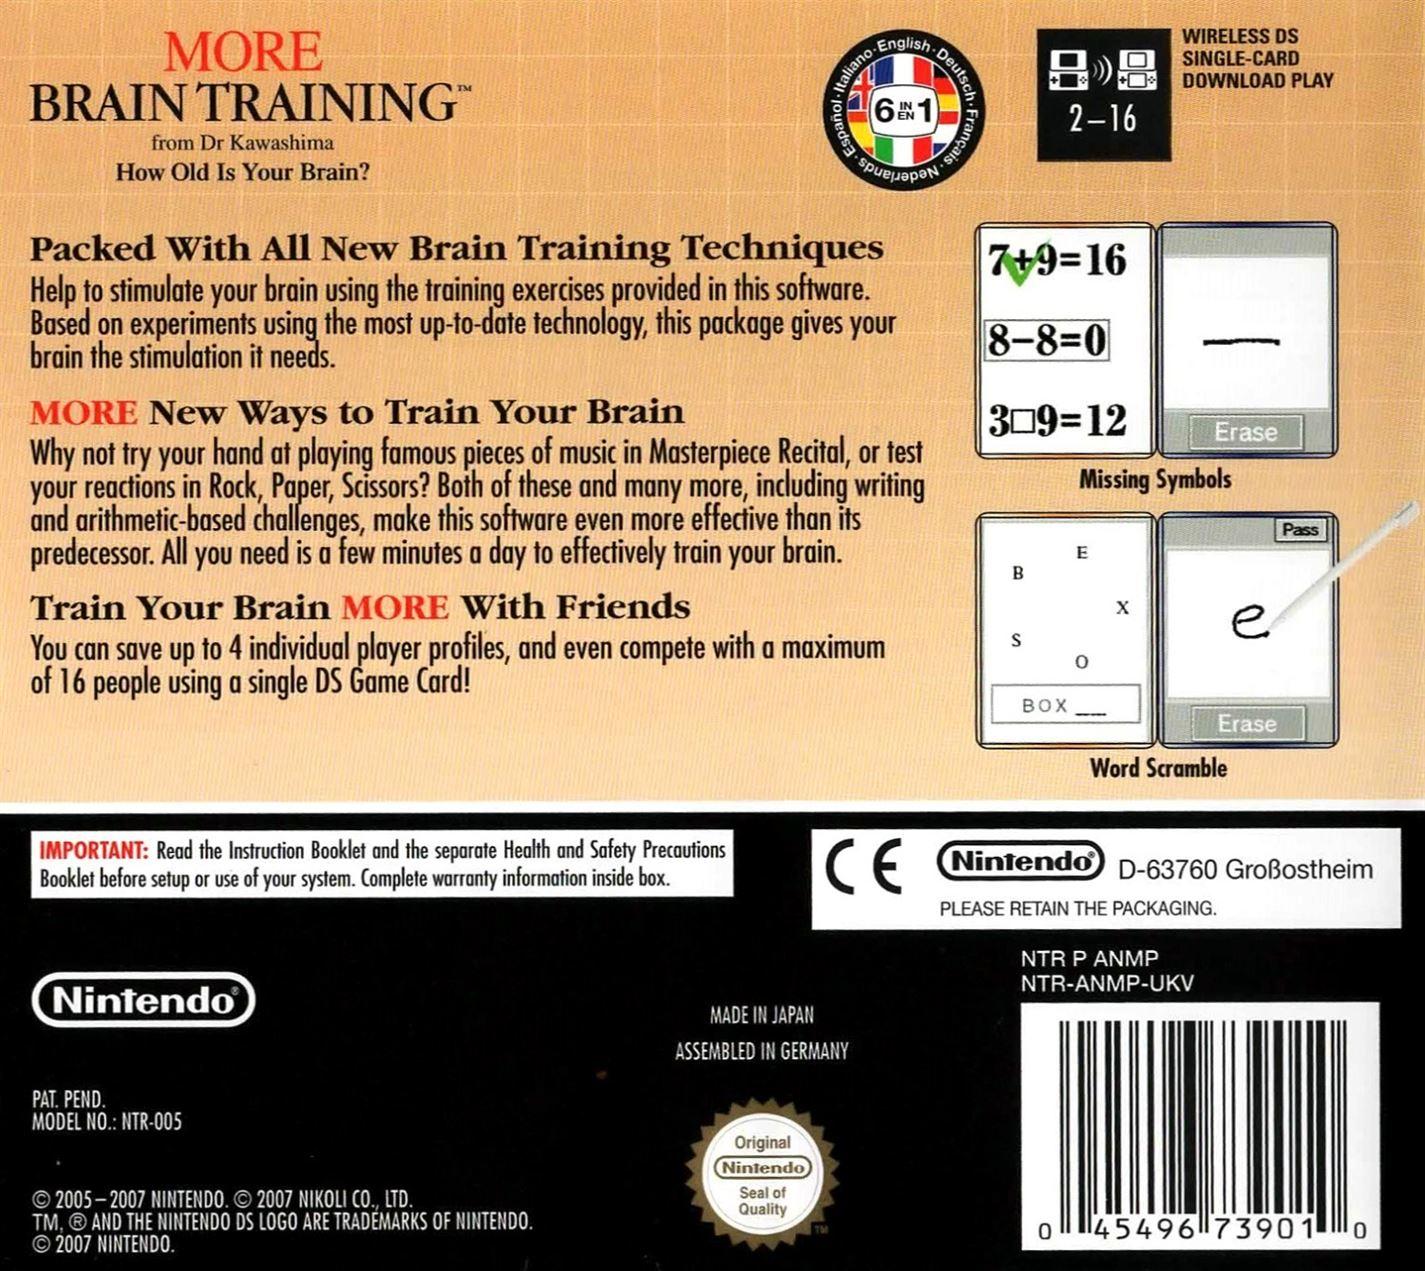 Dr Kawashima's More Brain Training DS (Nintendo DS) - UK Seller